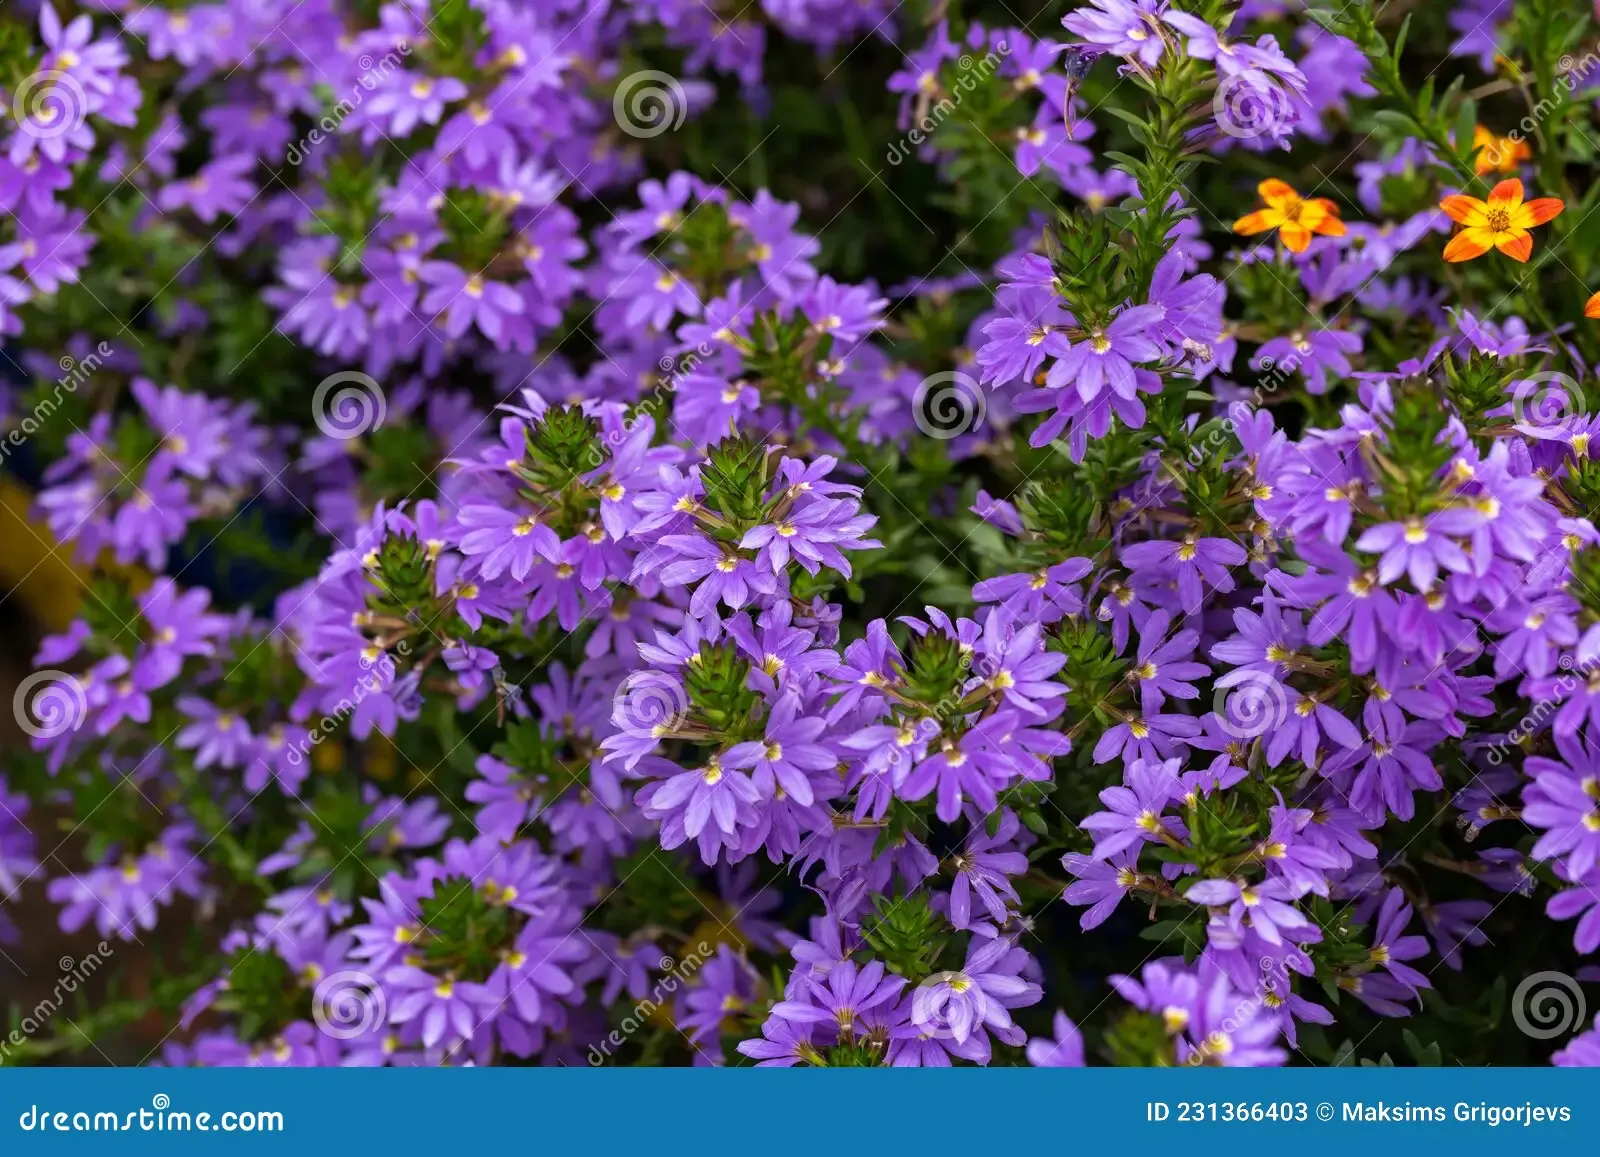 deep-violet-blue-surdiva-scaevola-aemula-flowers-late-summer-garden-231366403.jpg